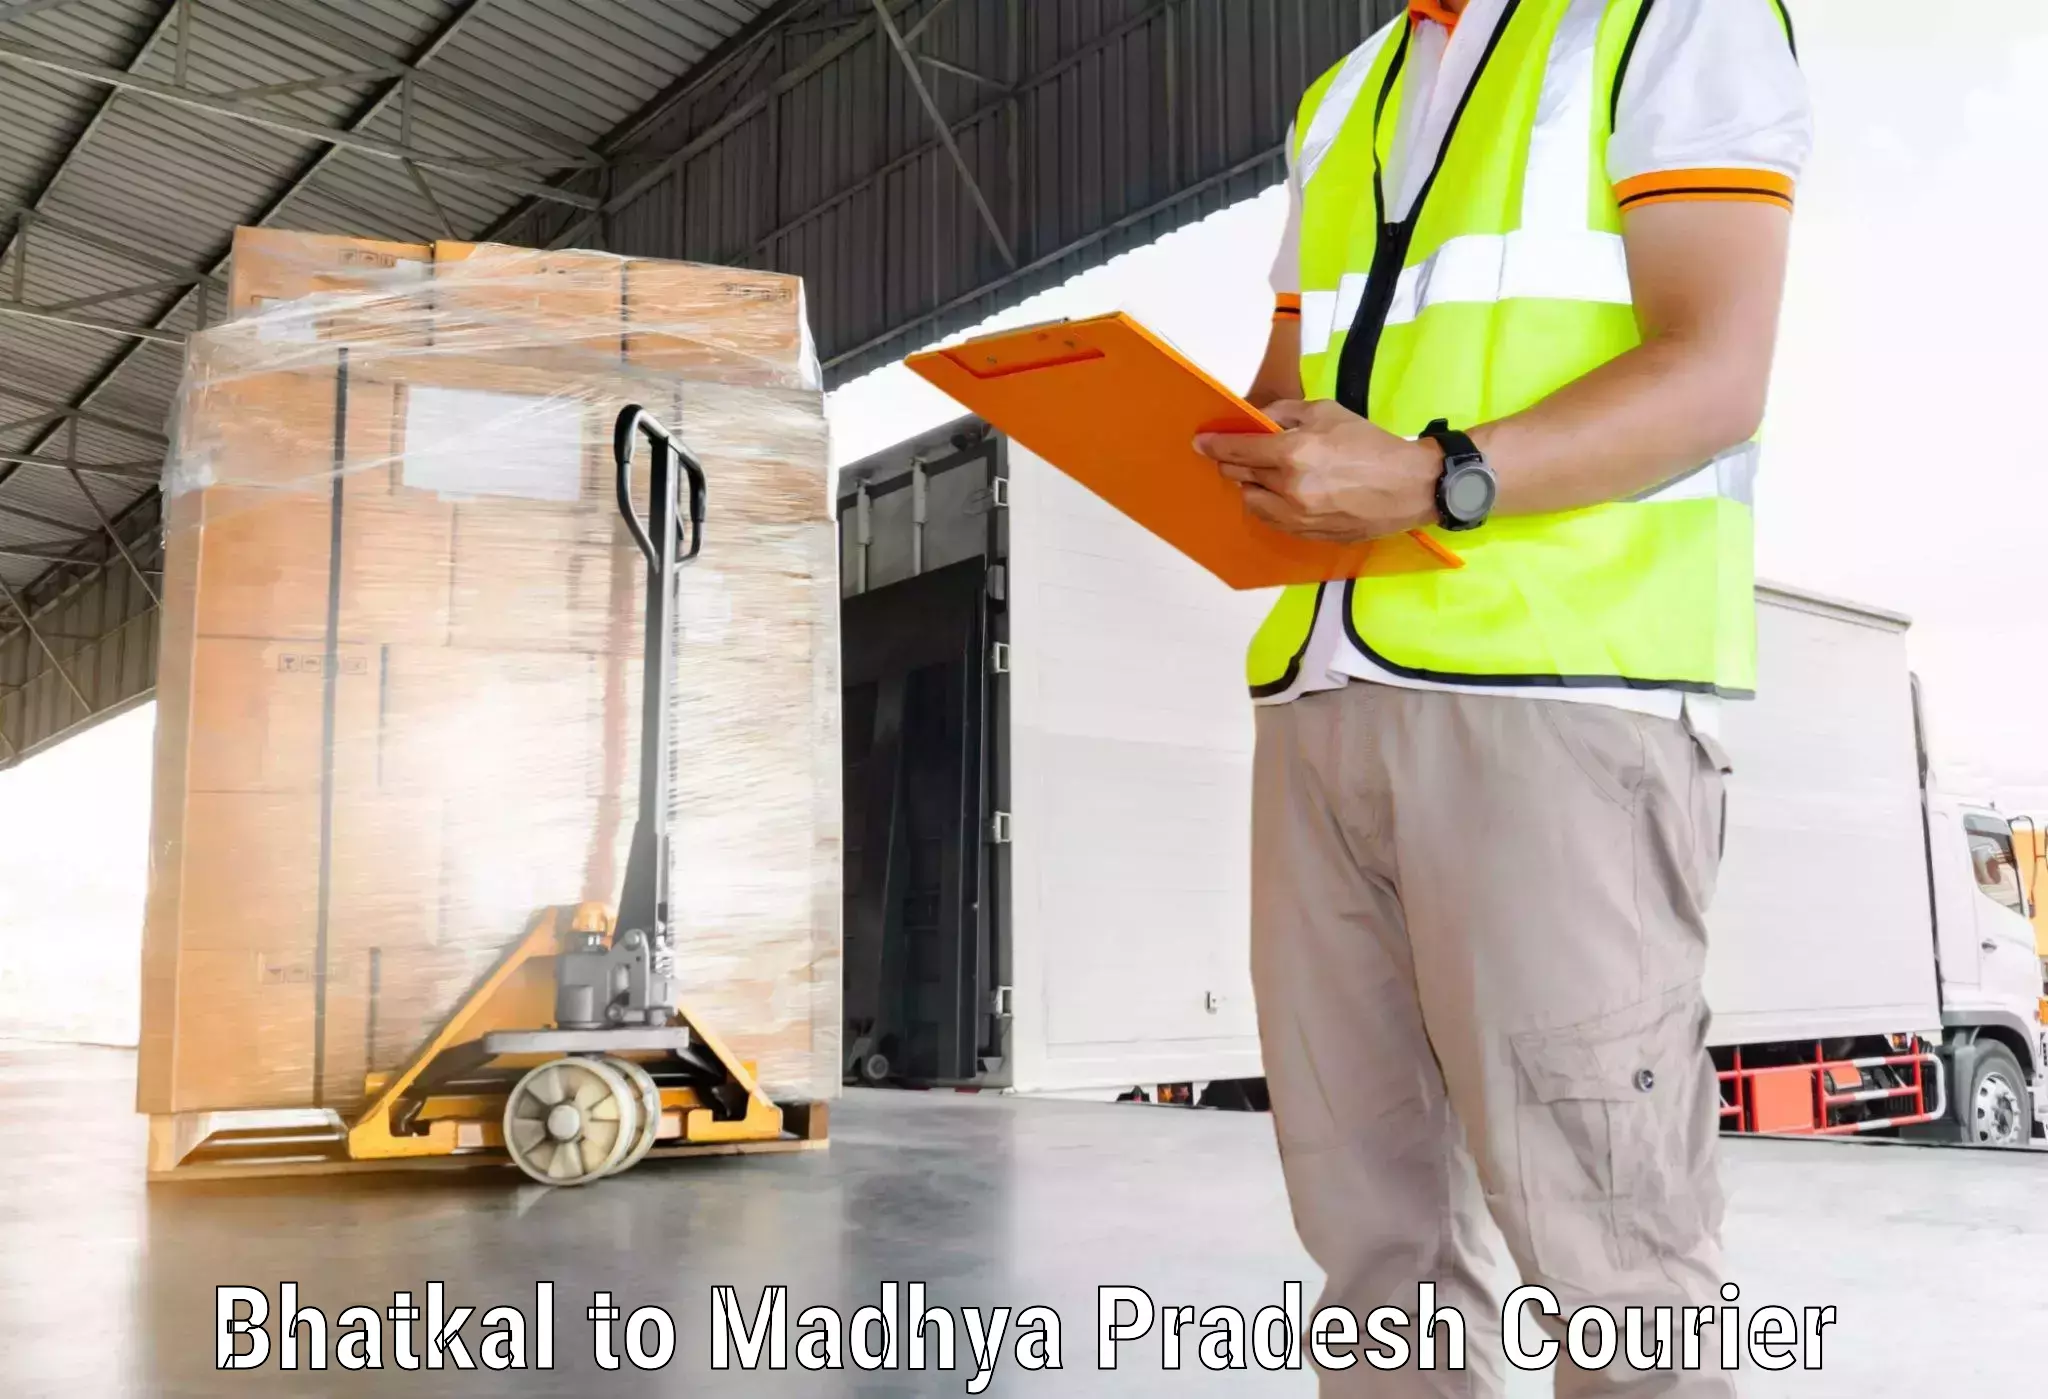 Courier service partnerships in Bhatkal to Gadarwara